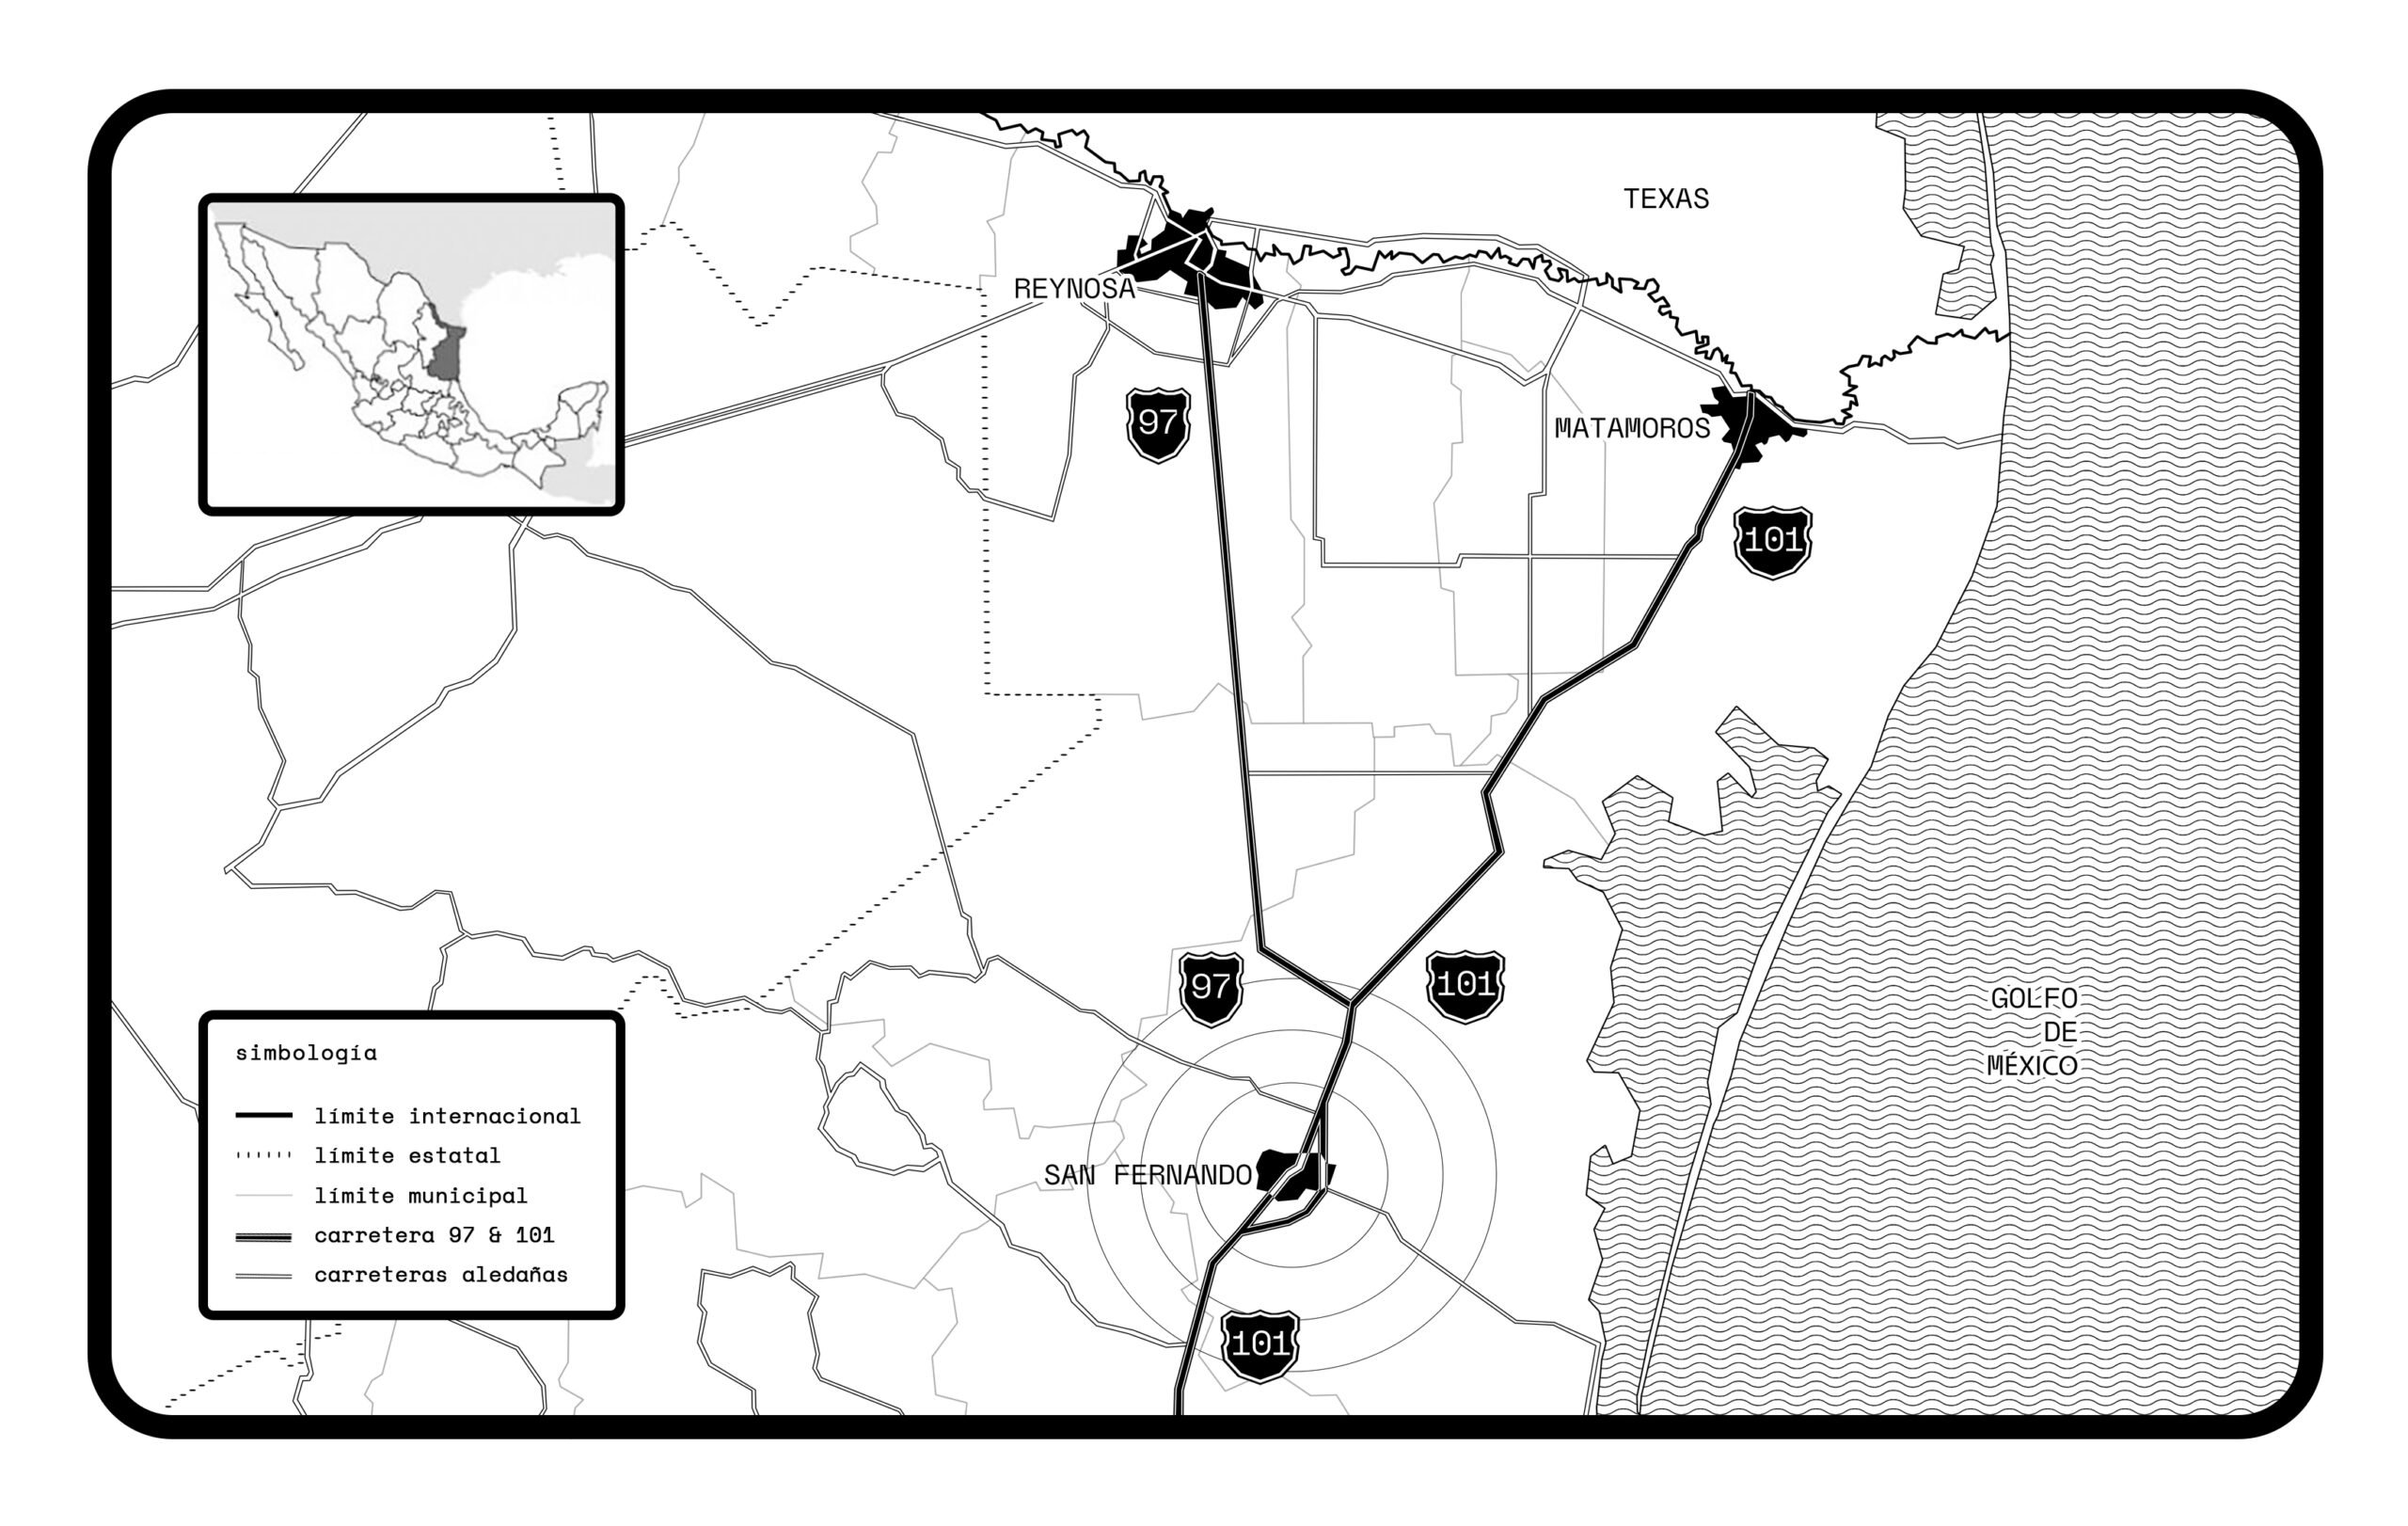 A map showing San Fernando's close proximity to the Texas border.